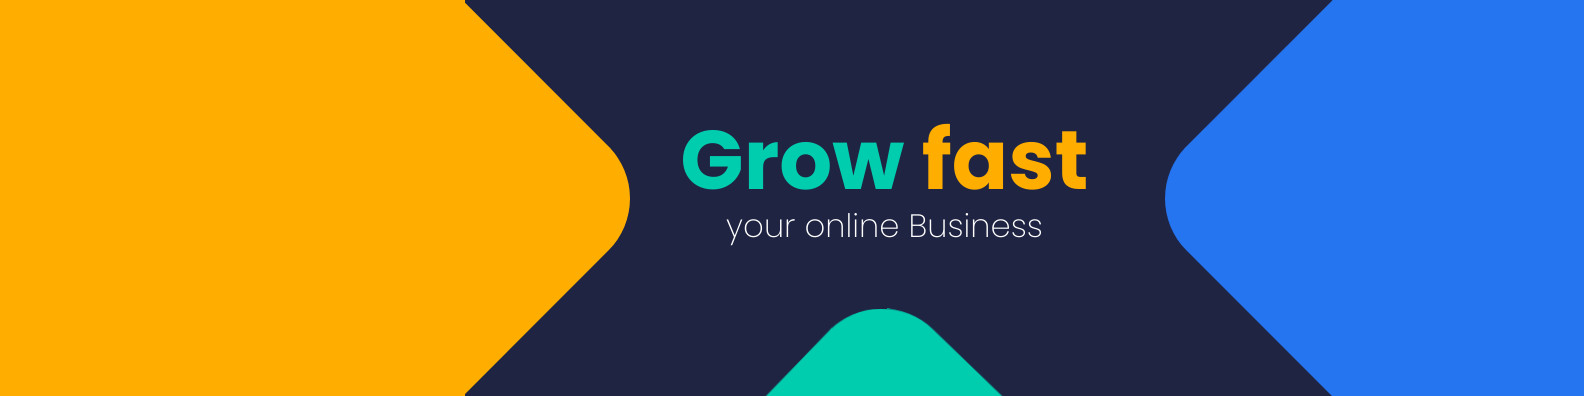 Grow Fast Your Online Business Linkedin Profile BG